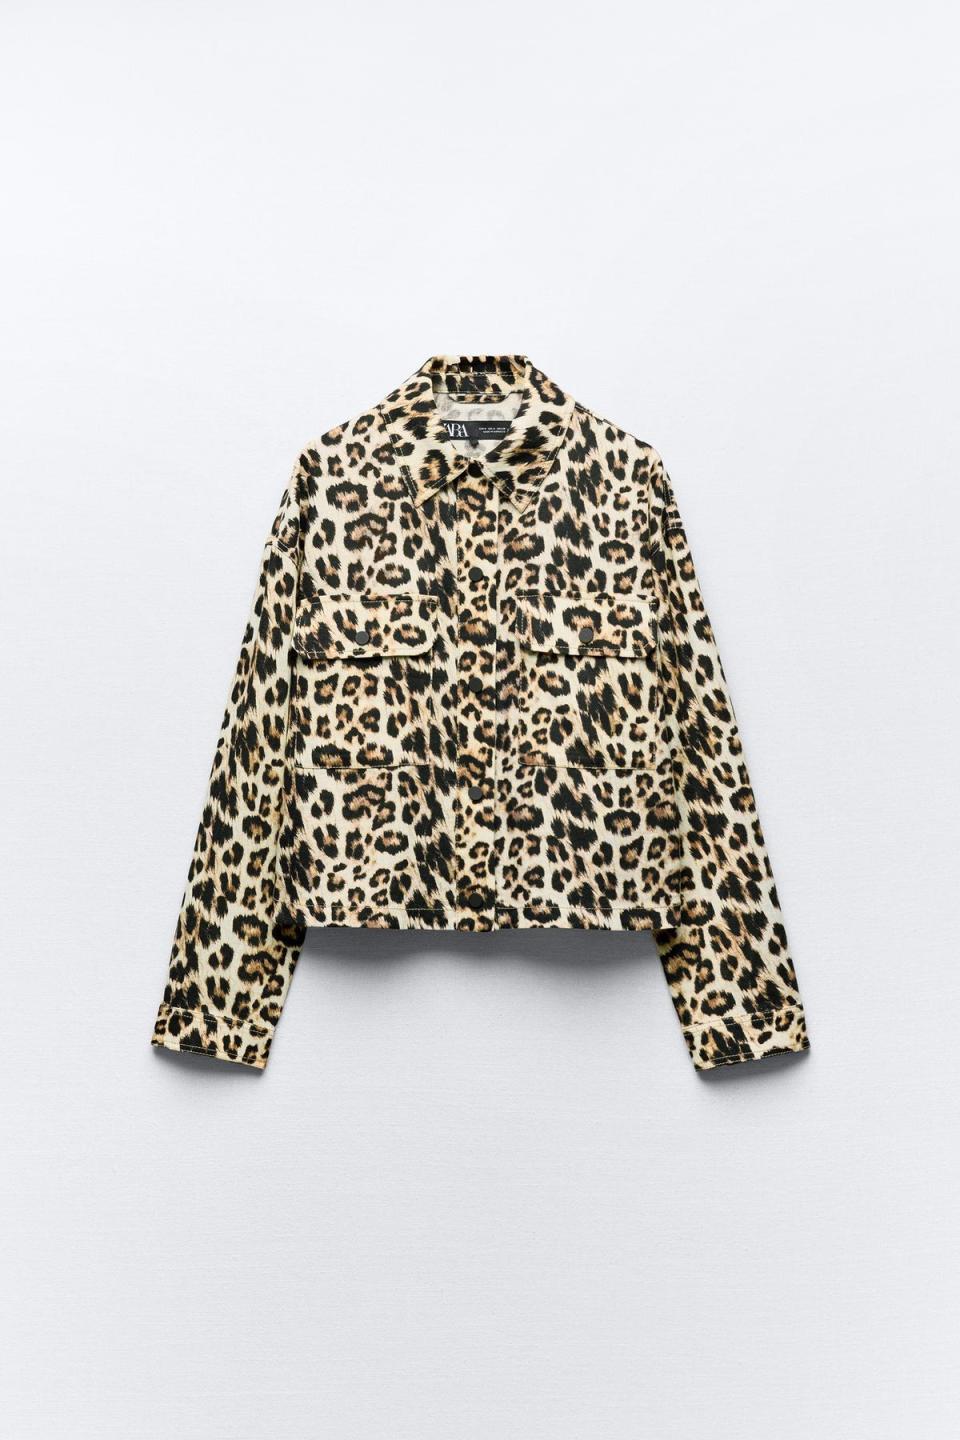 Linen-Blend Animal-Print Overshirt, 45.99, zara.com (Zara)